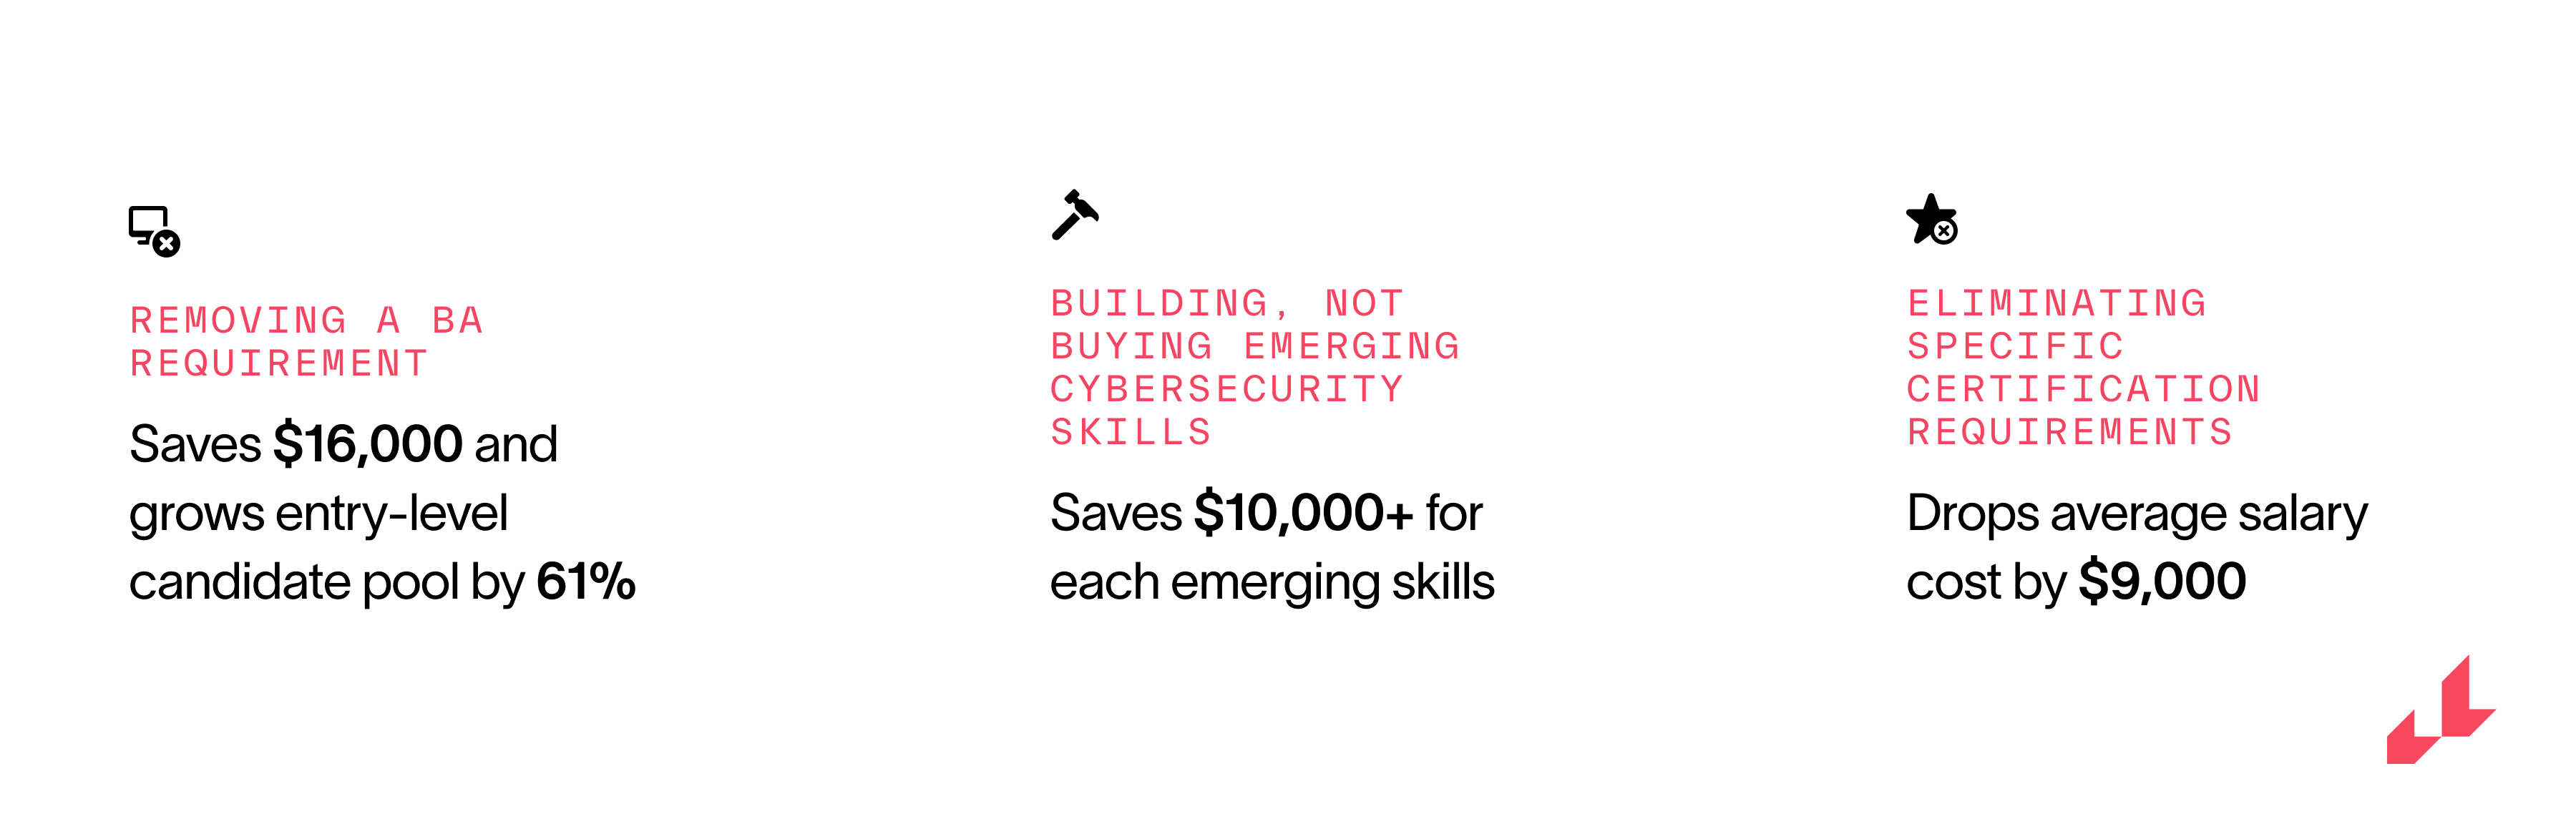 cybersecurity job description